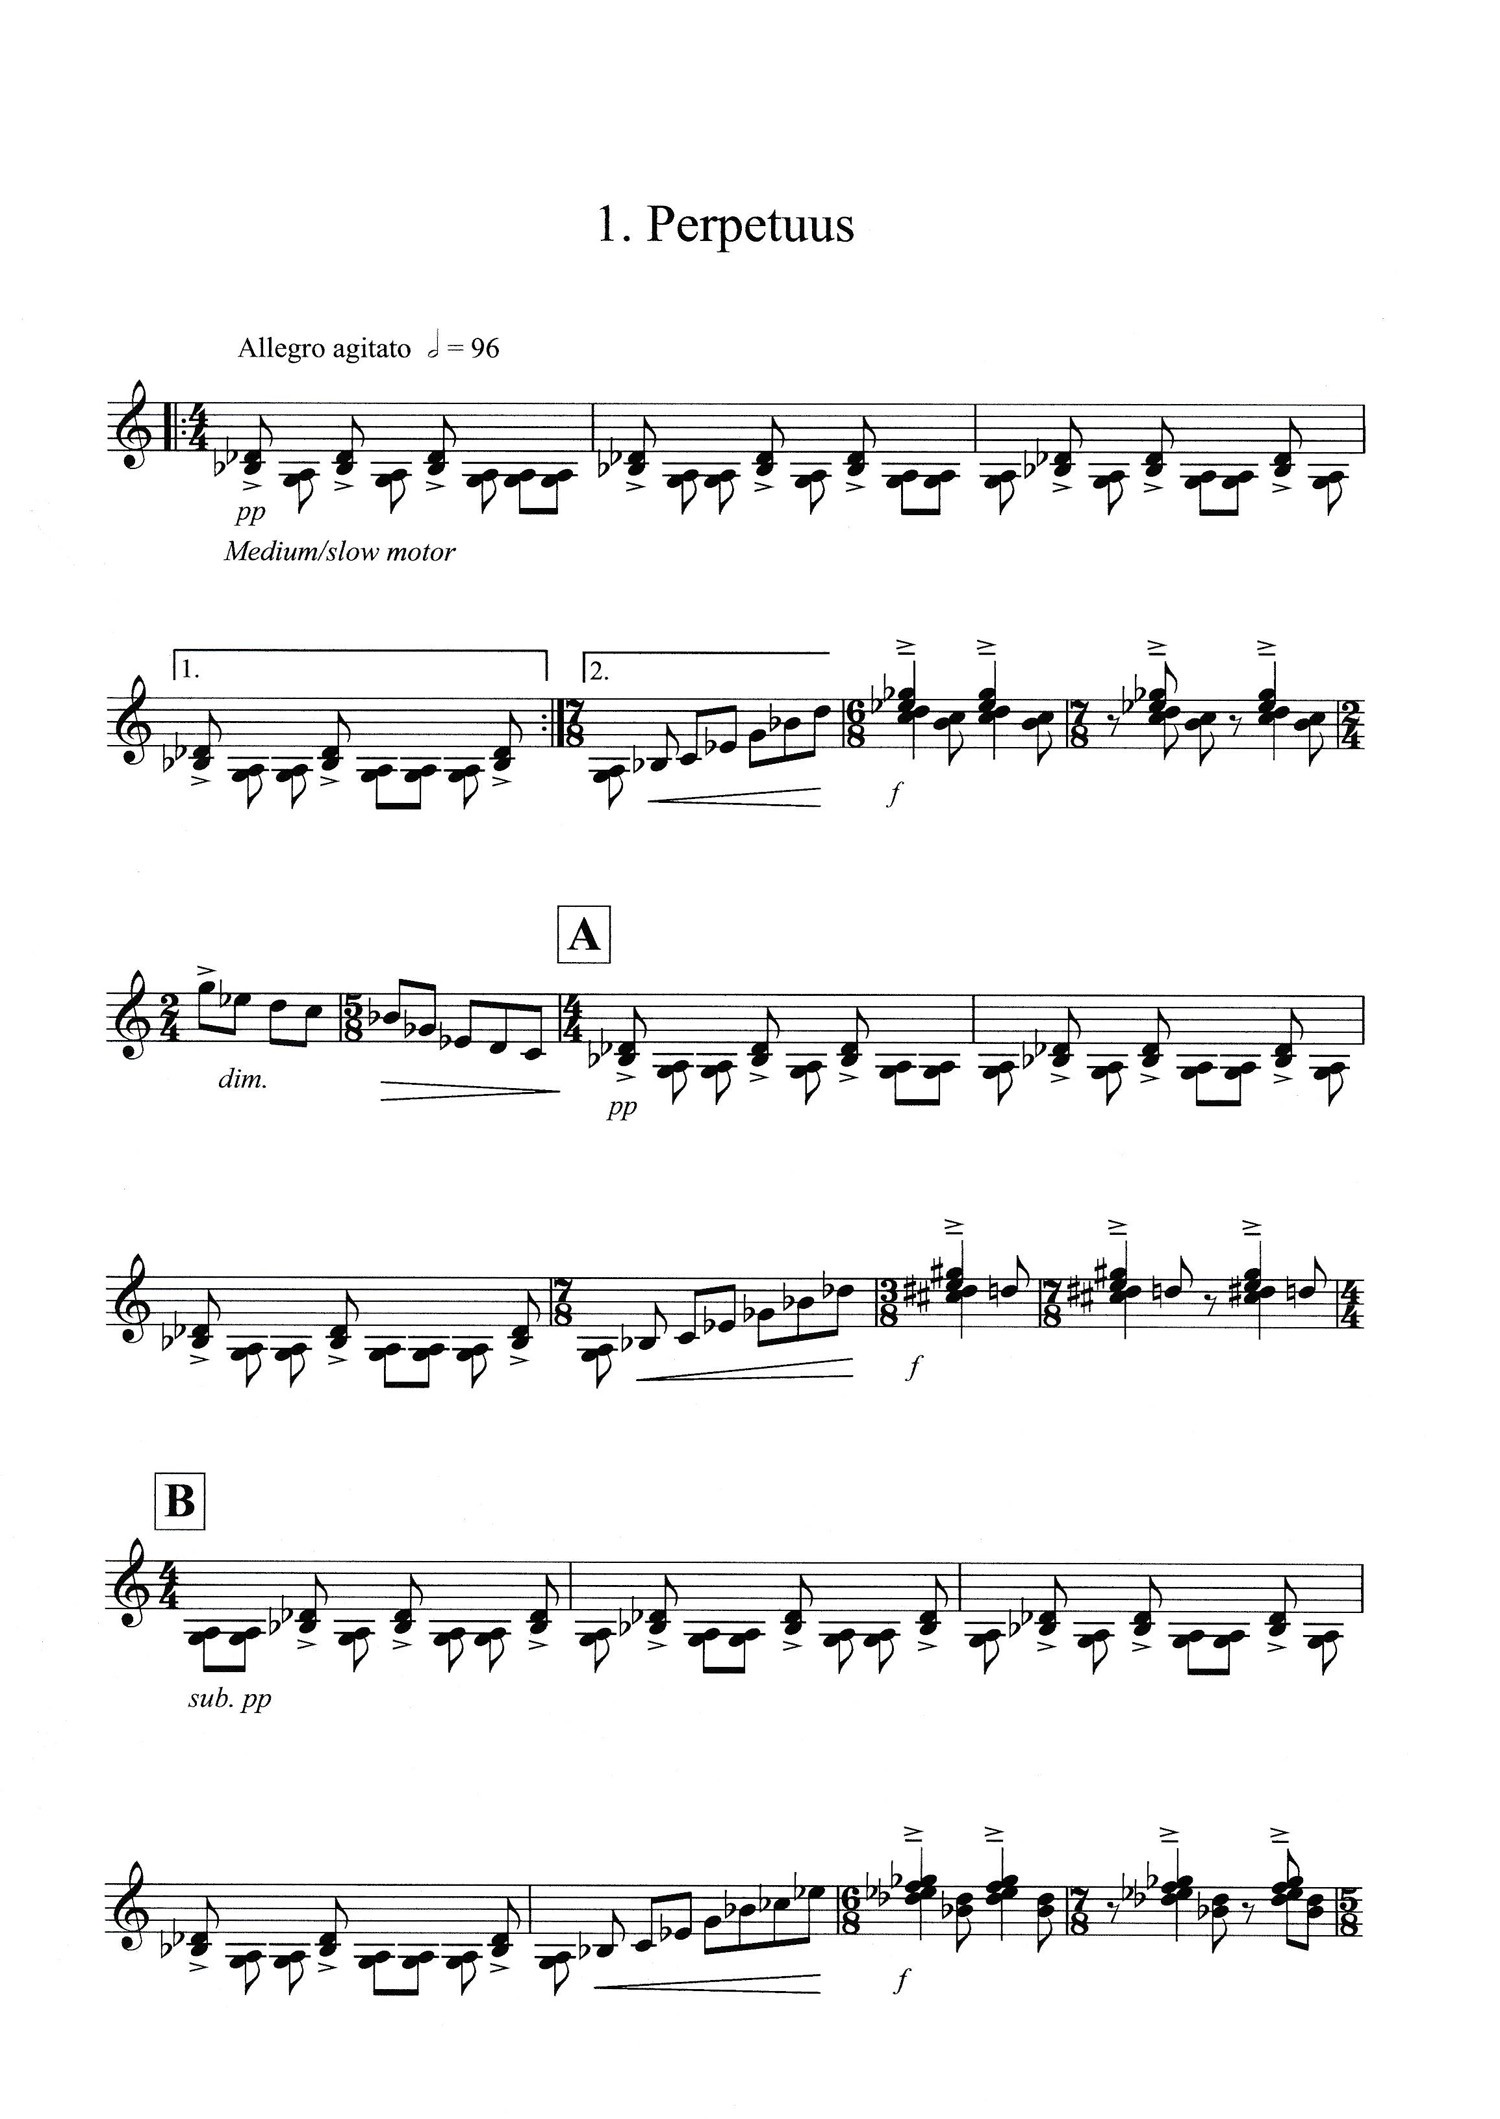 Suite for Solo Vibraphone by David Hext